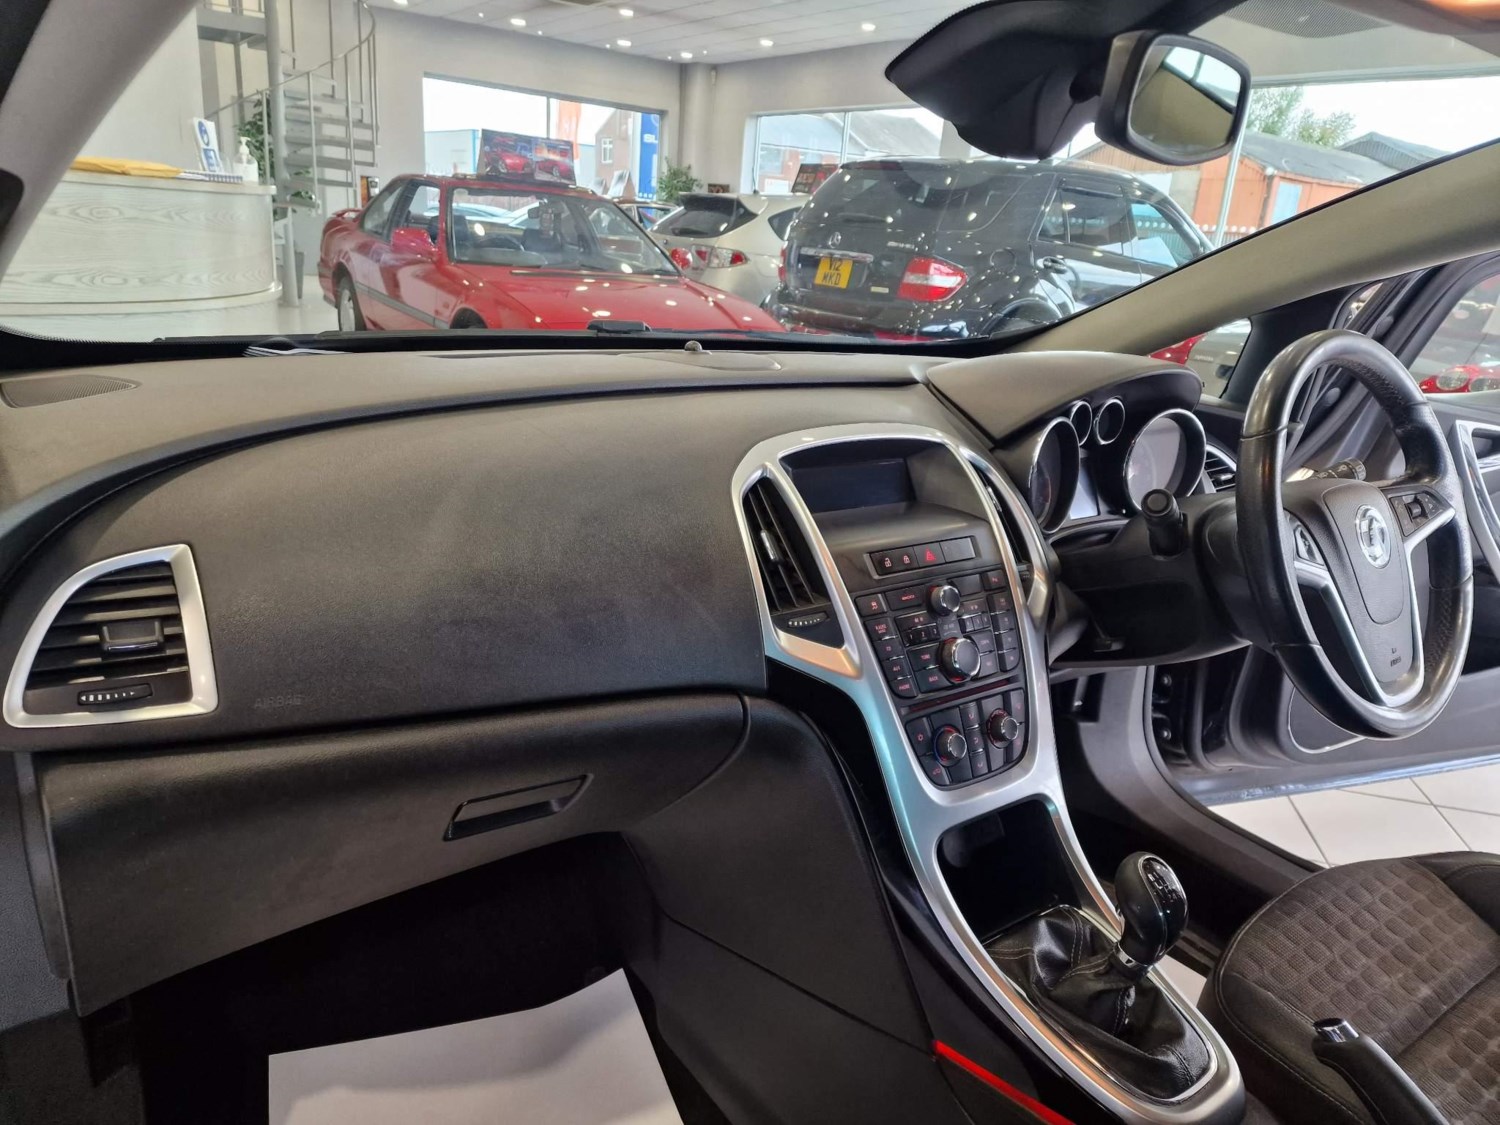 Vauxhall Astra GTC Listing Image